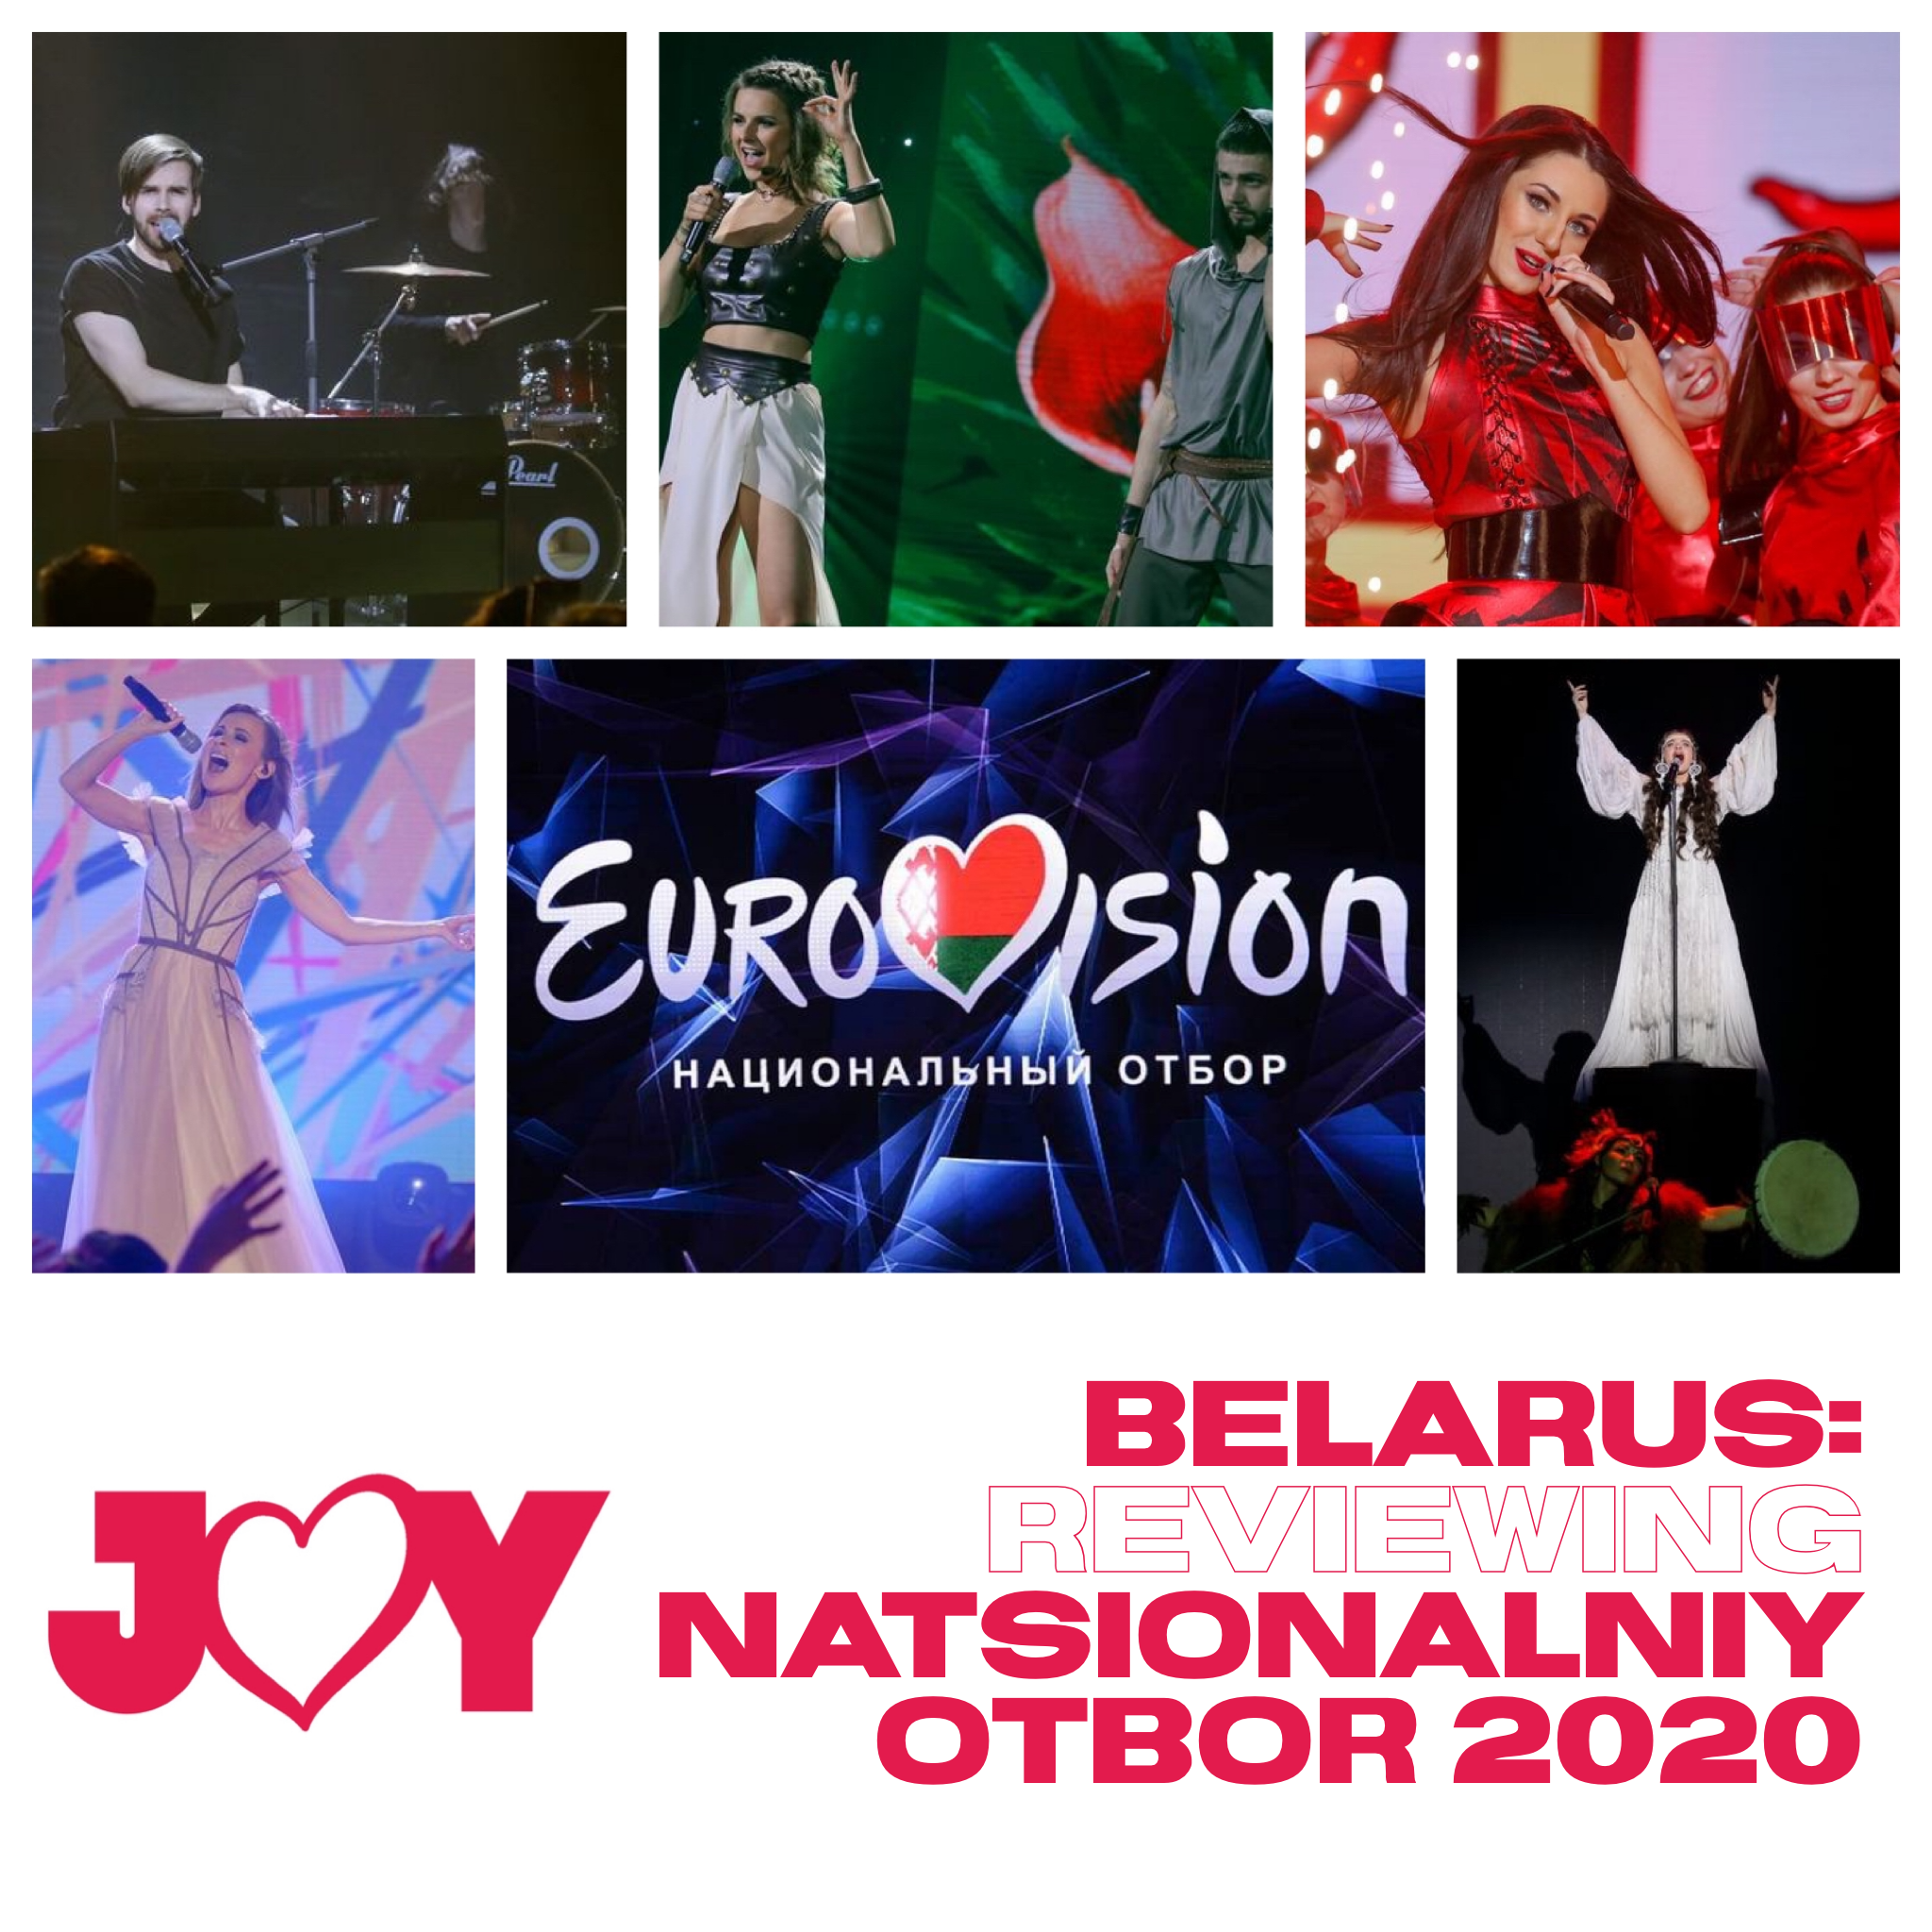 We love Belarus: Reviewing Natsionalniy Otbor 2020